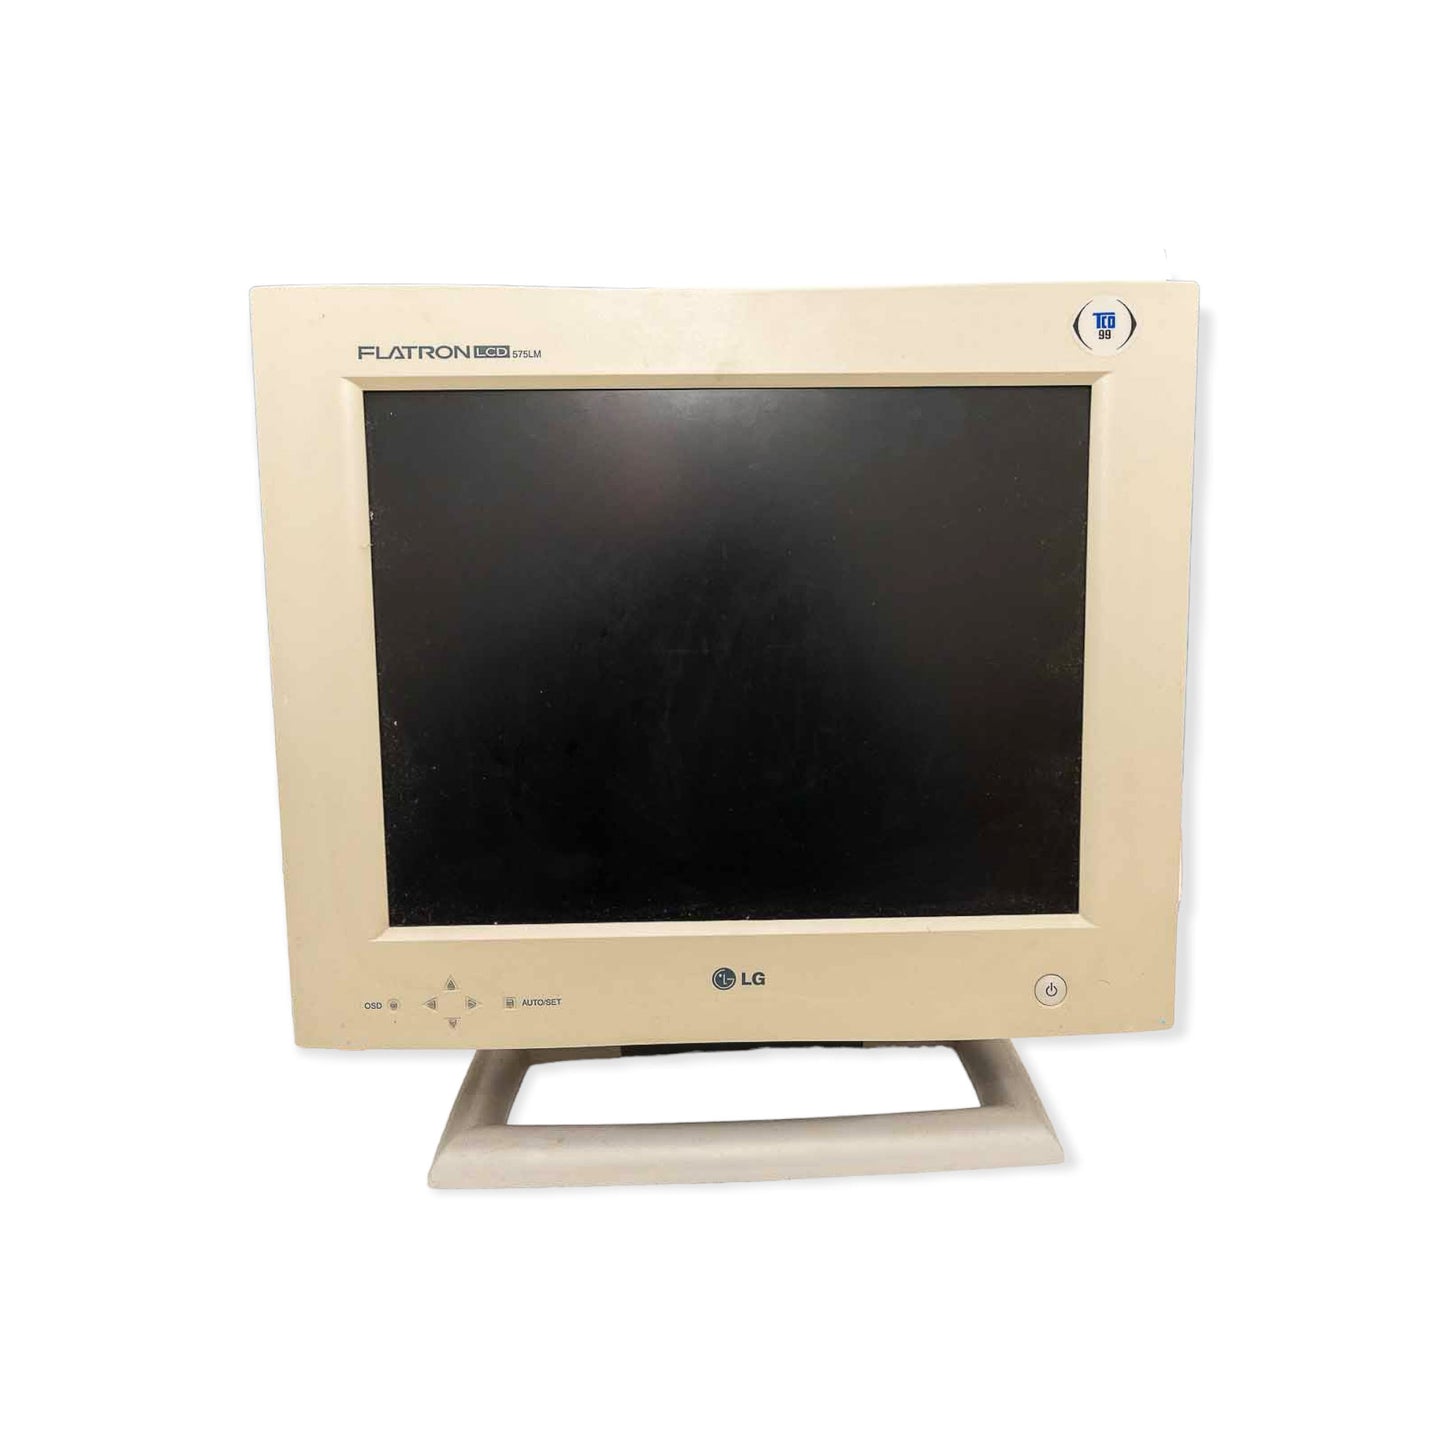 Monitor LG FLATRON LCD 575LM 15'' 1024 x 768 85hz